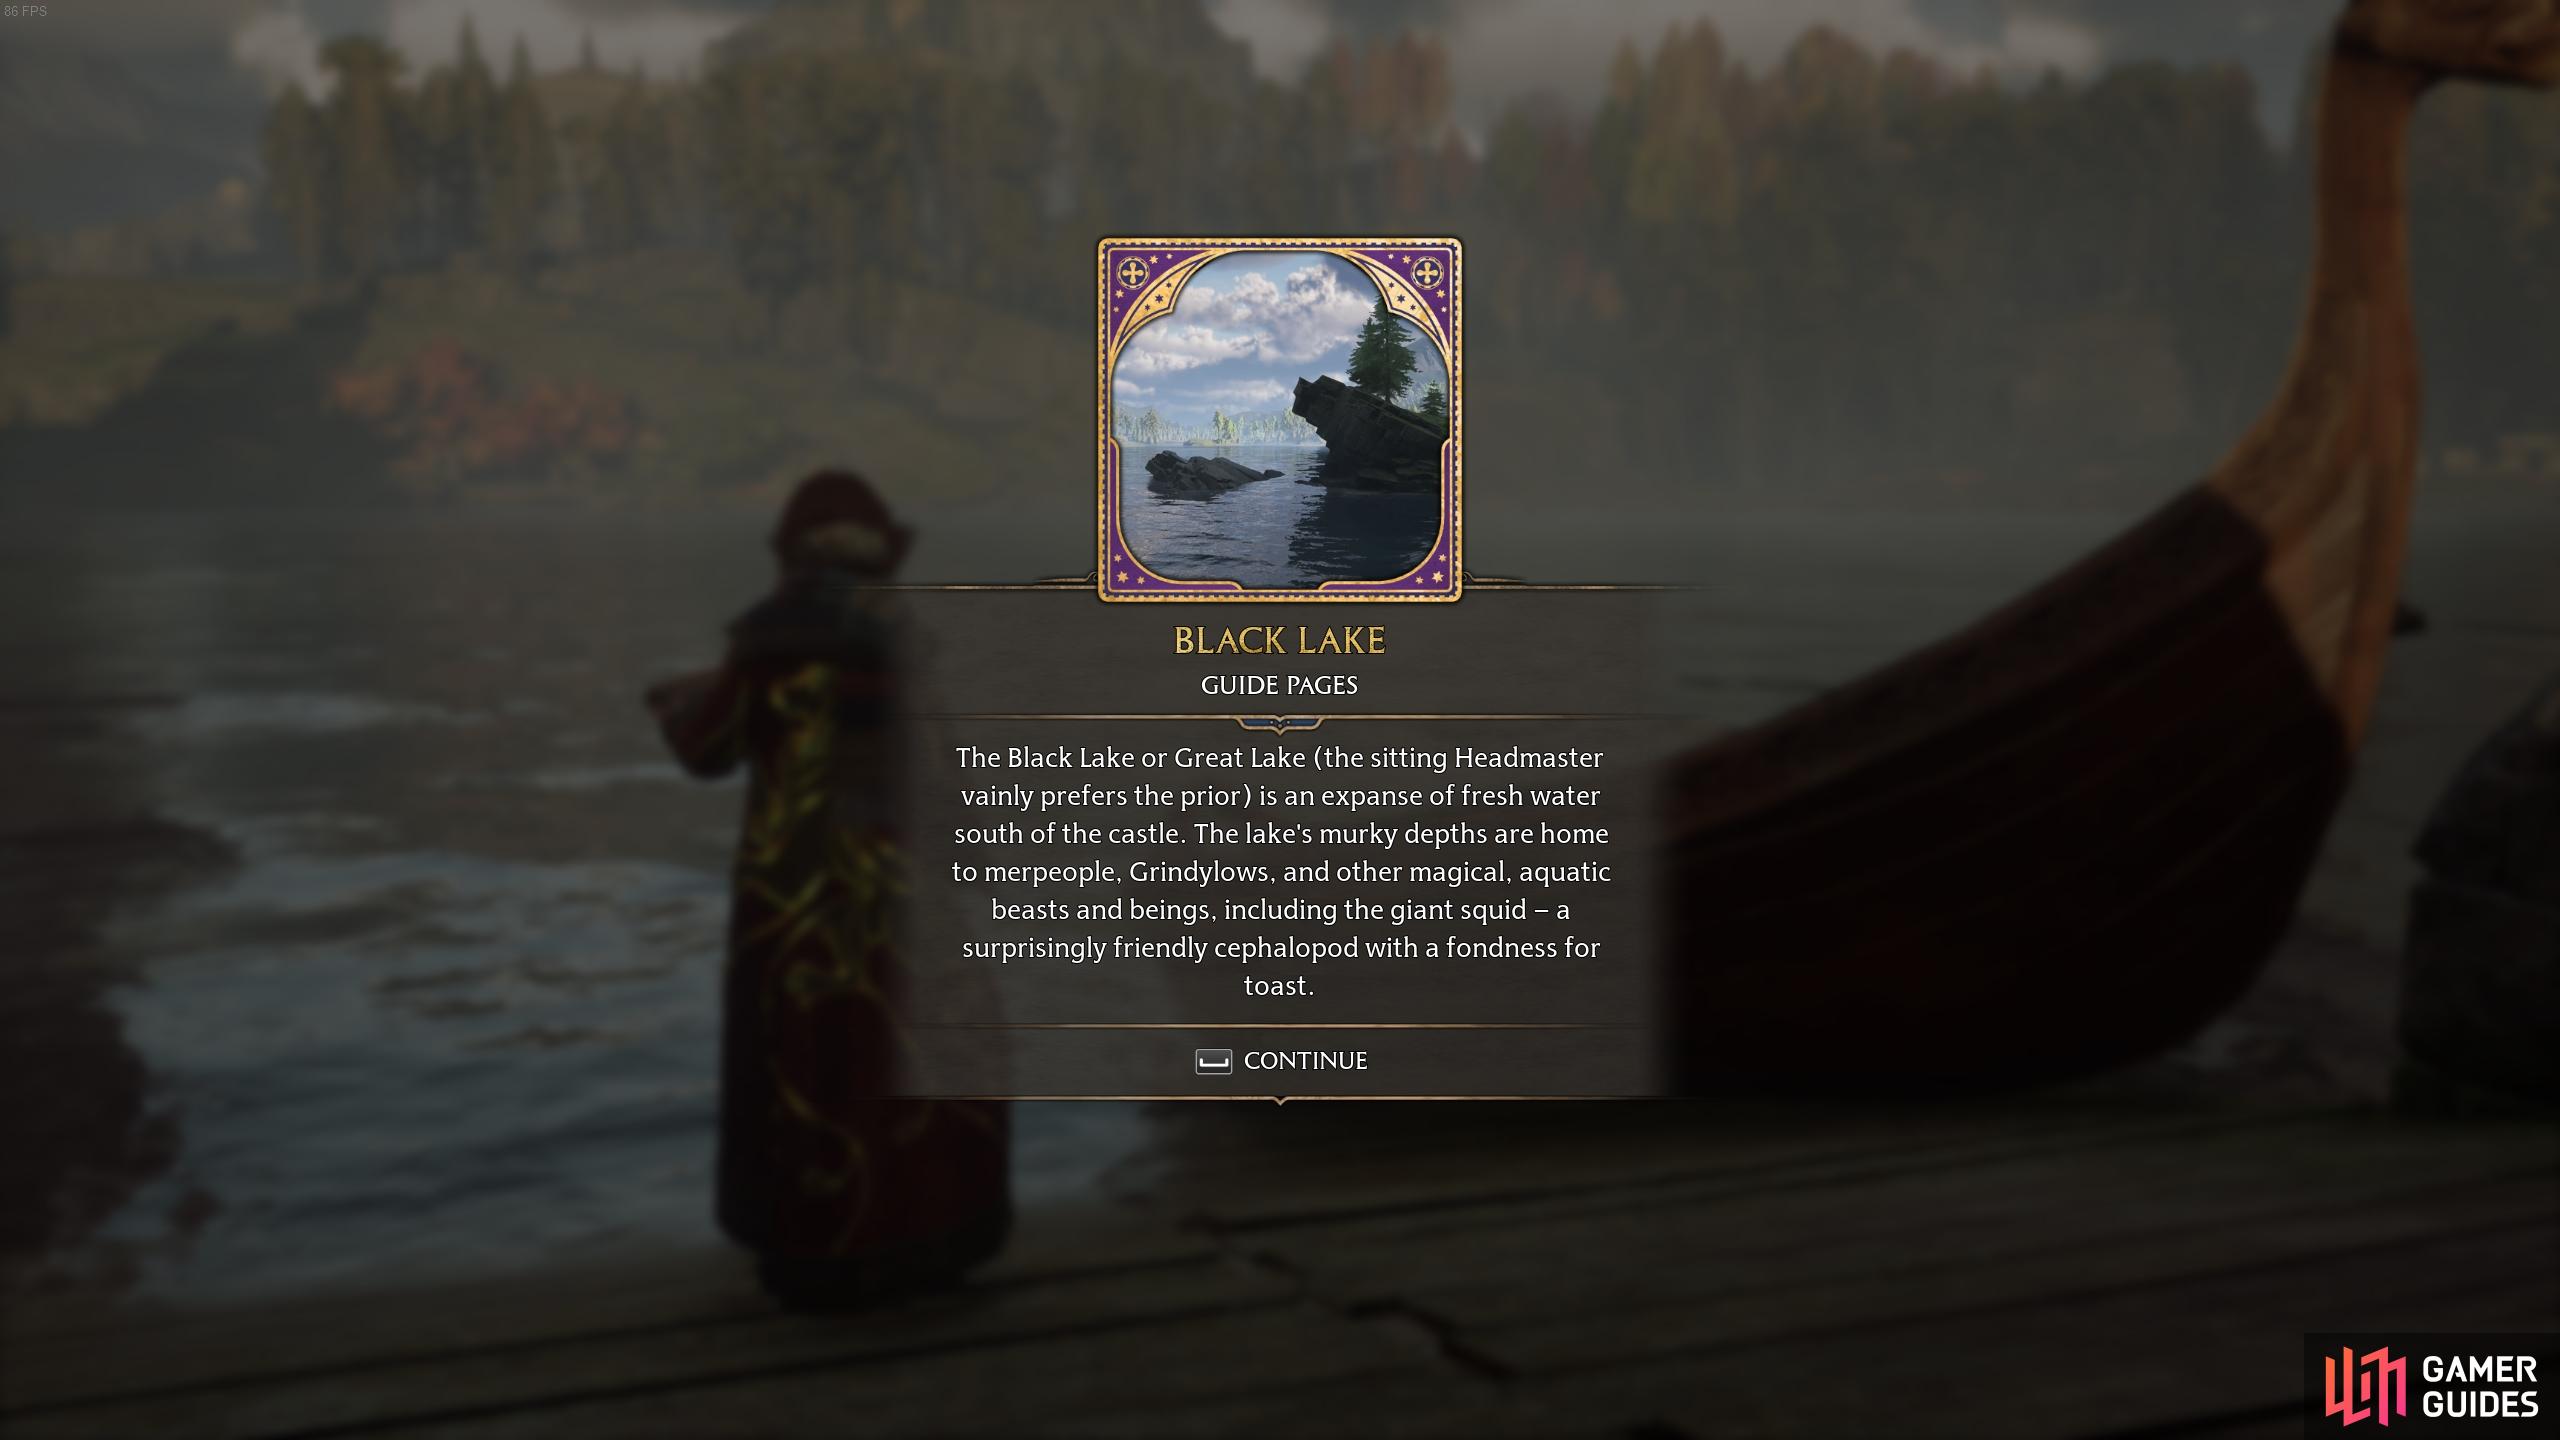 The description for the Black Lake page.